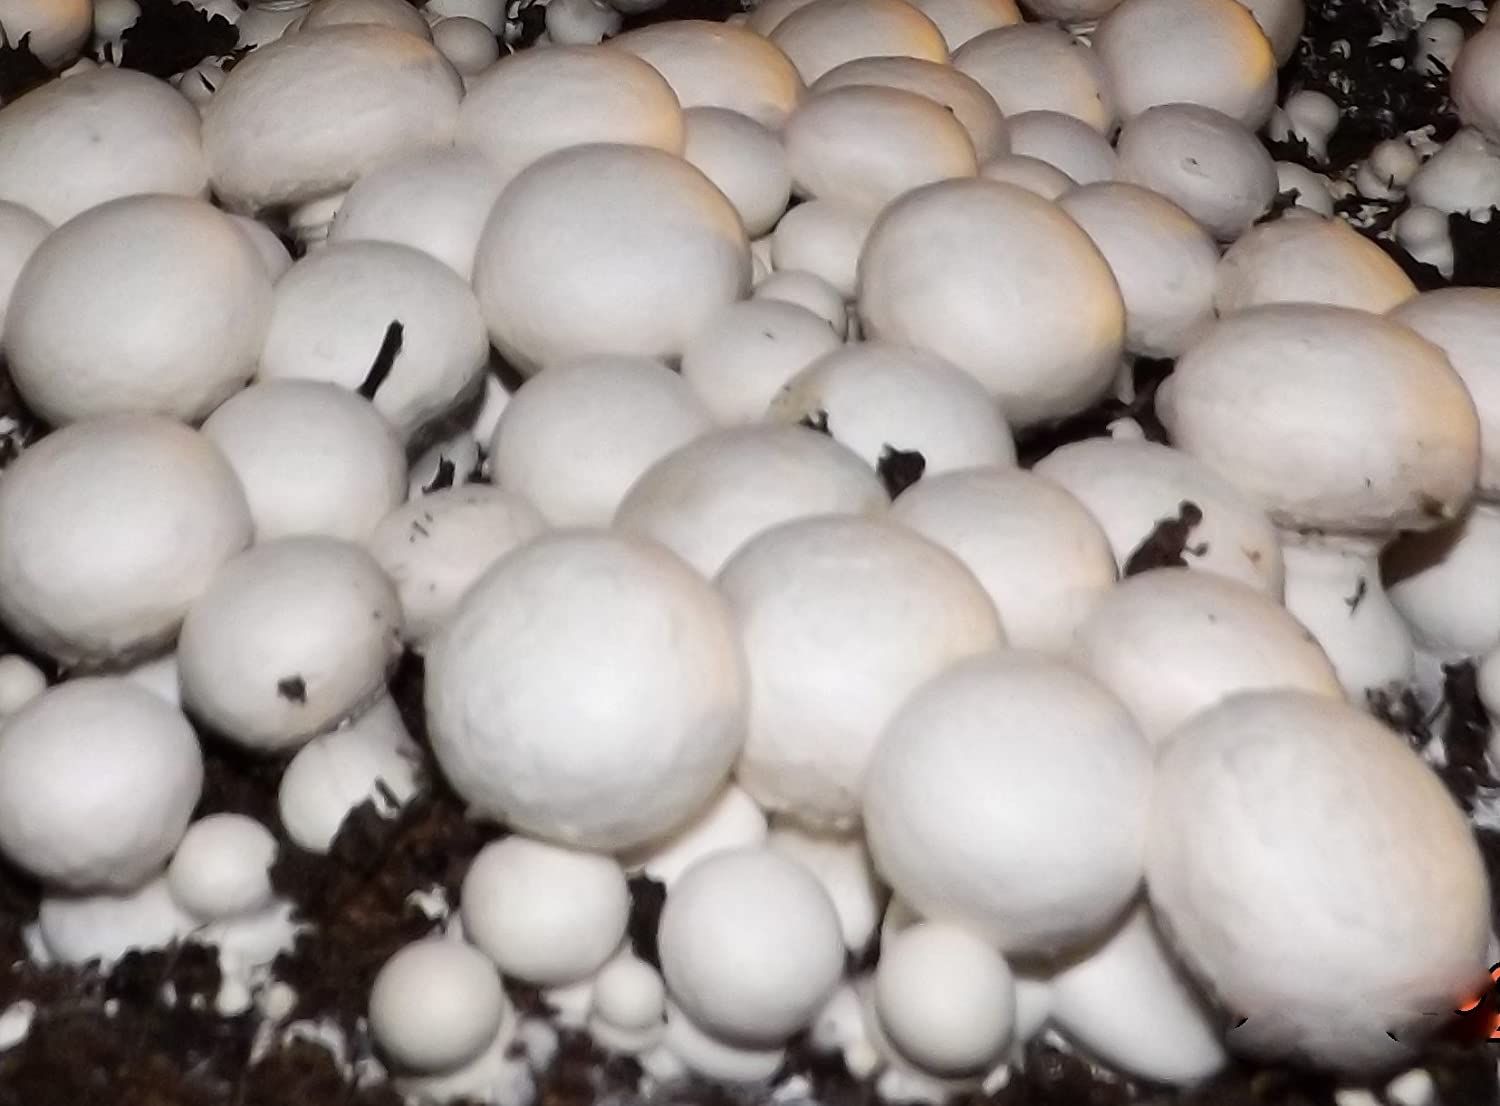 White Button Mushroom Growing Kit - $$title$$